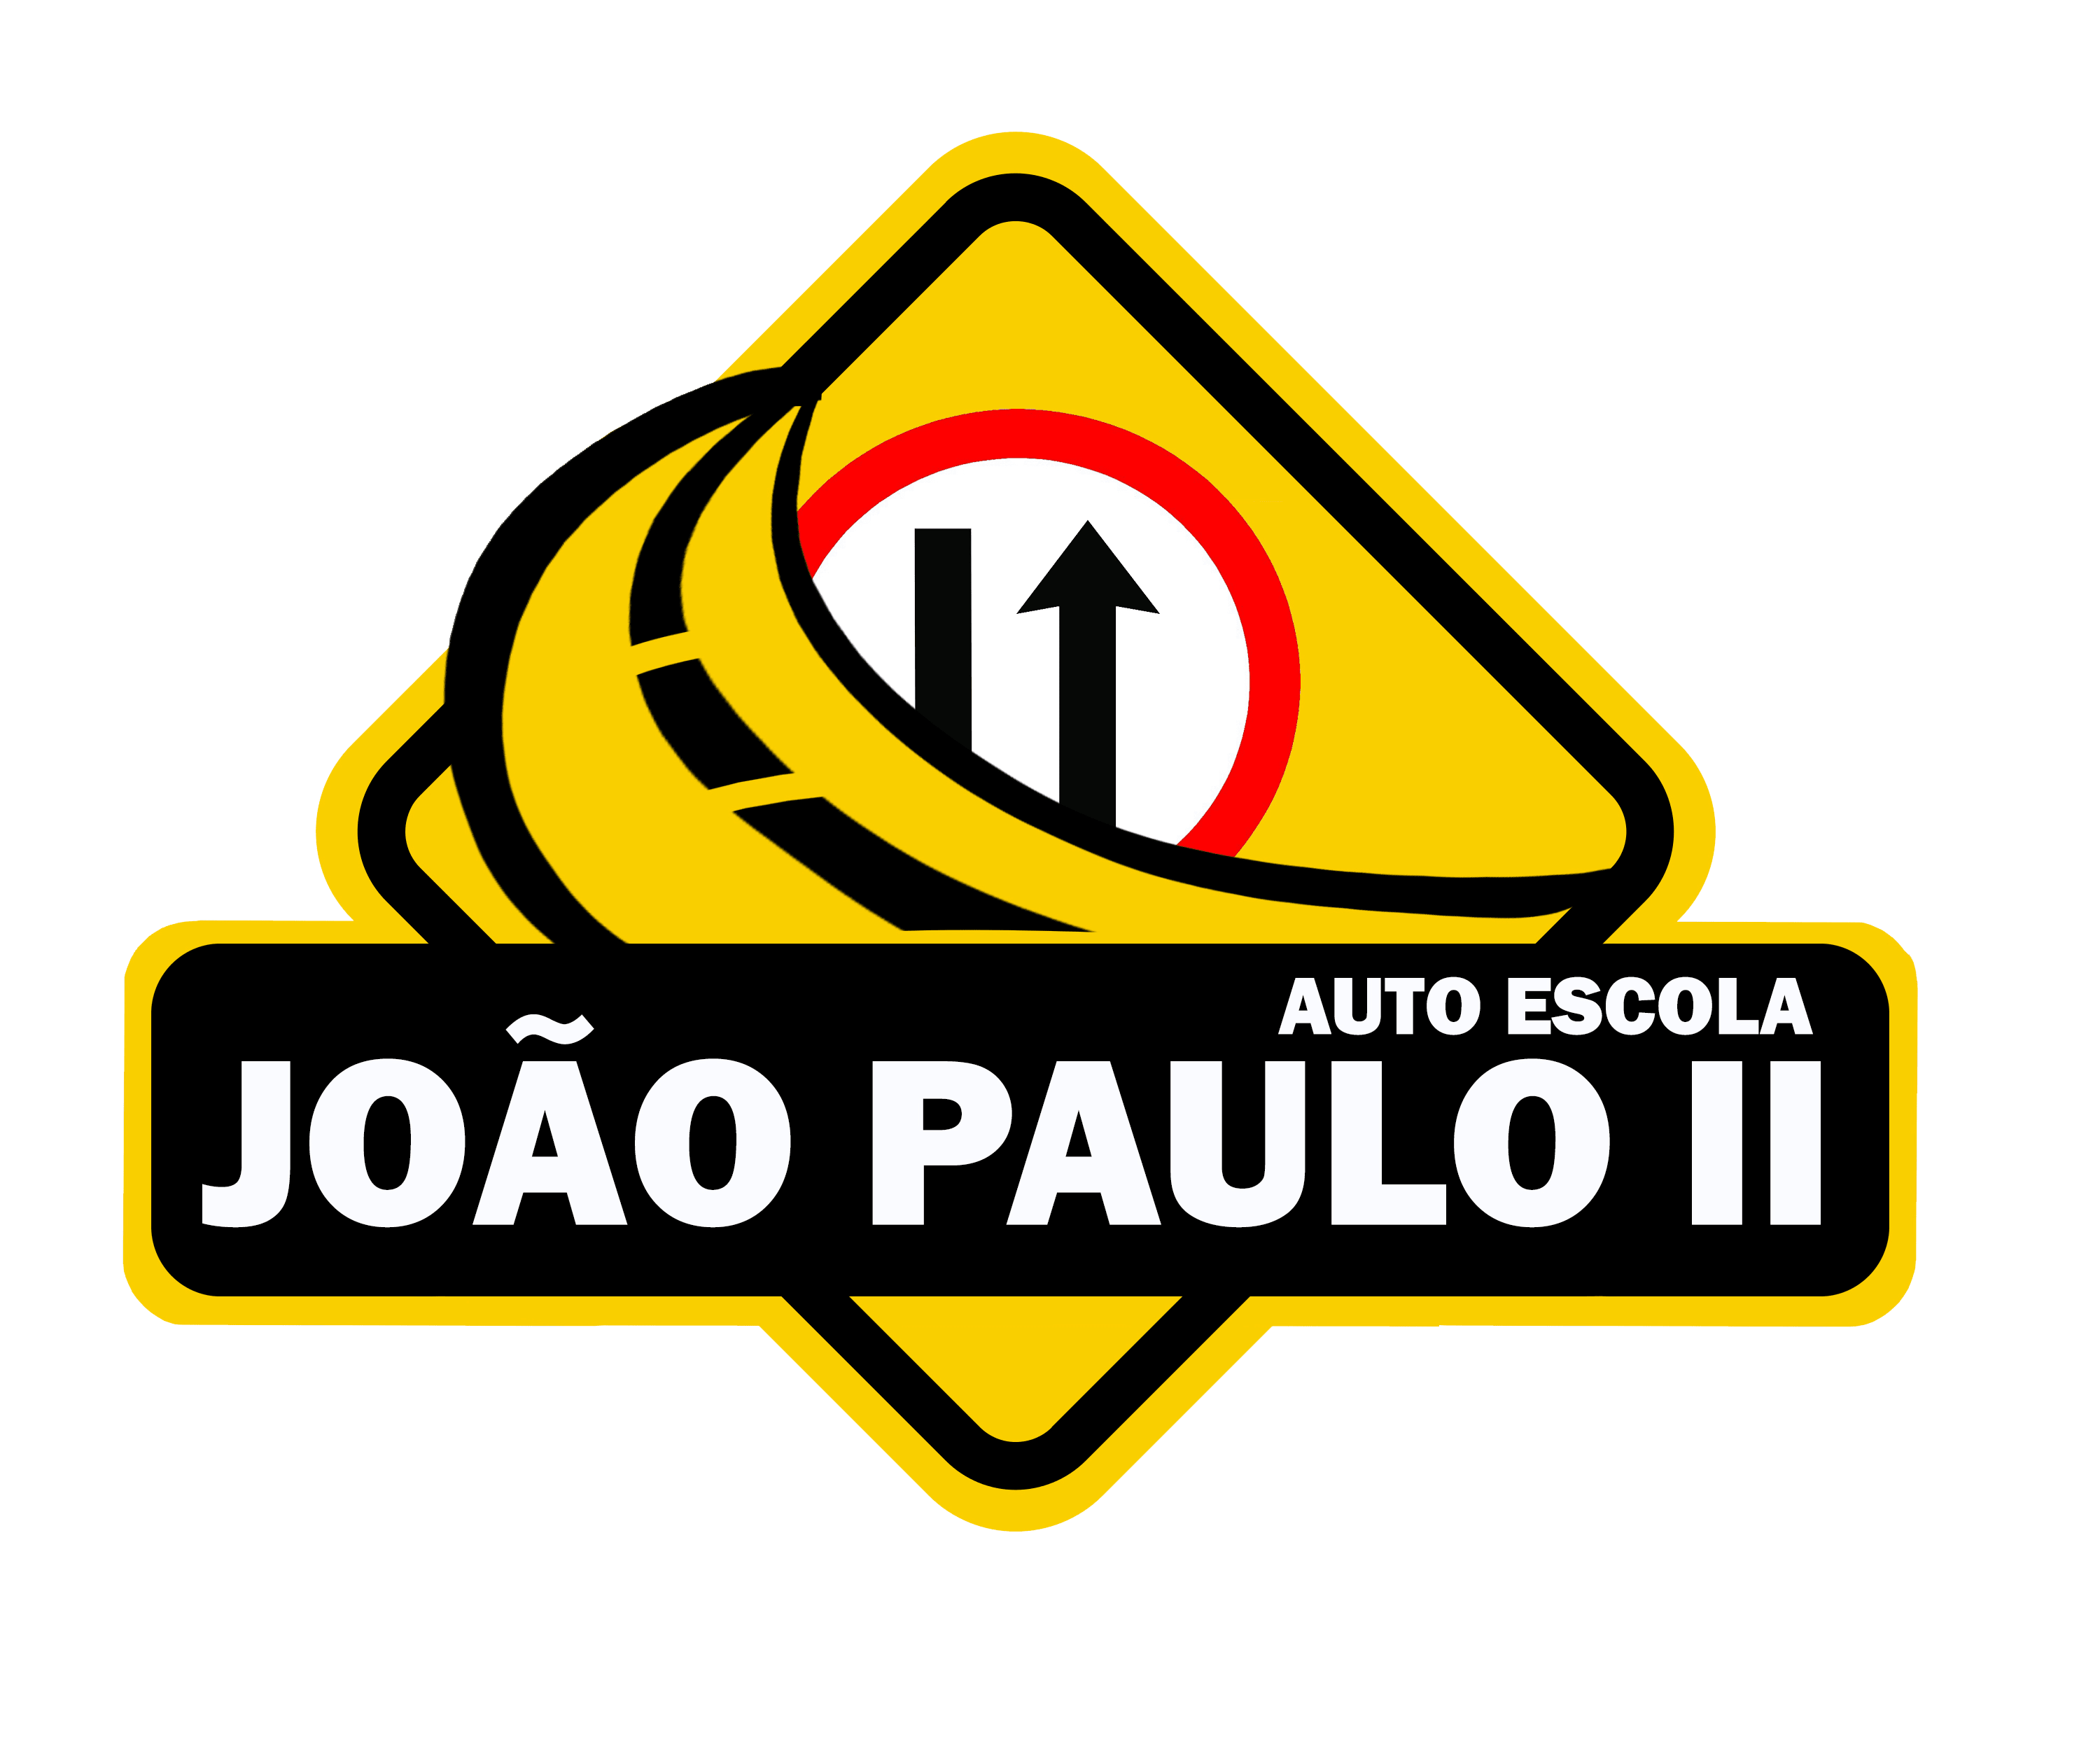 Autoescola João Paulo II